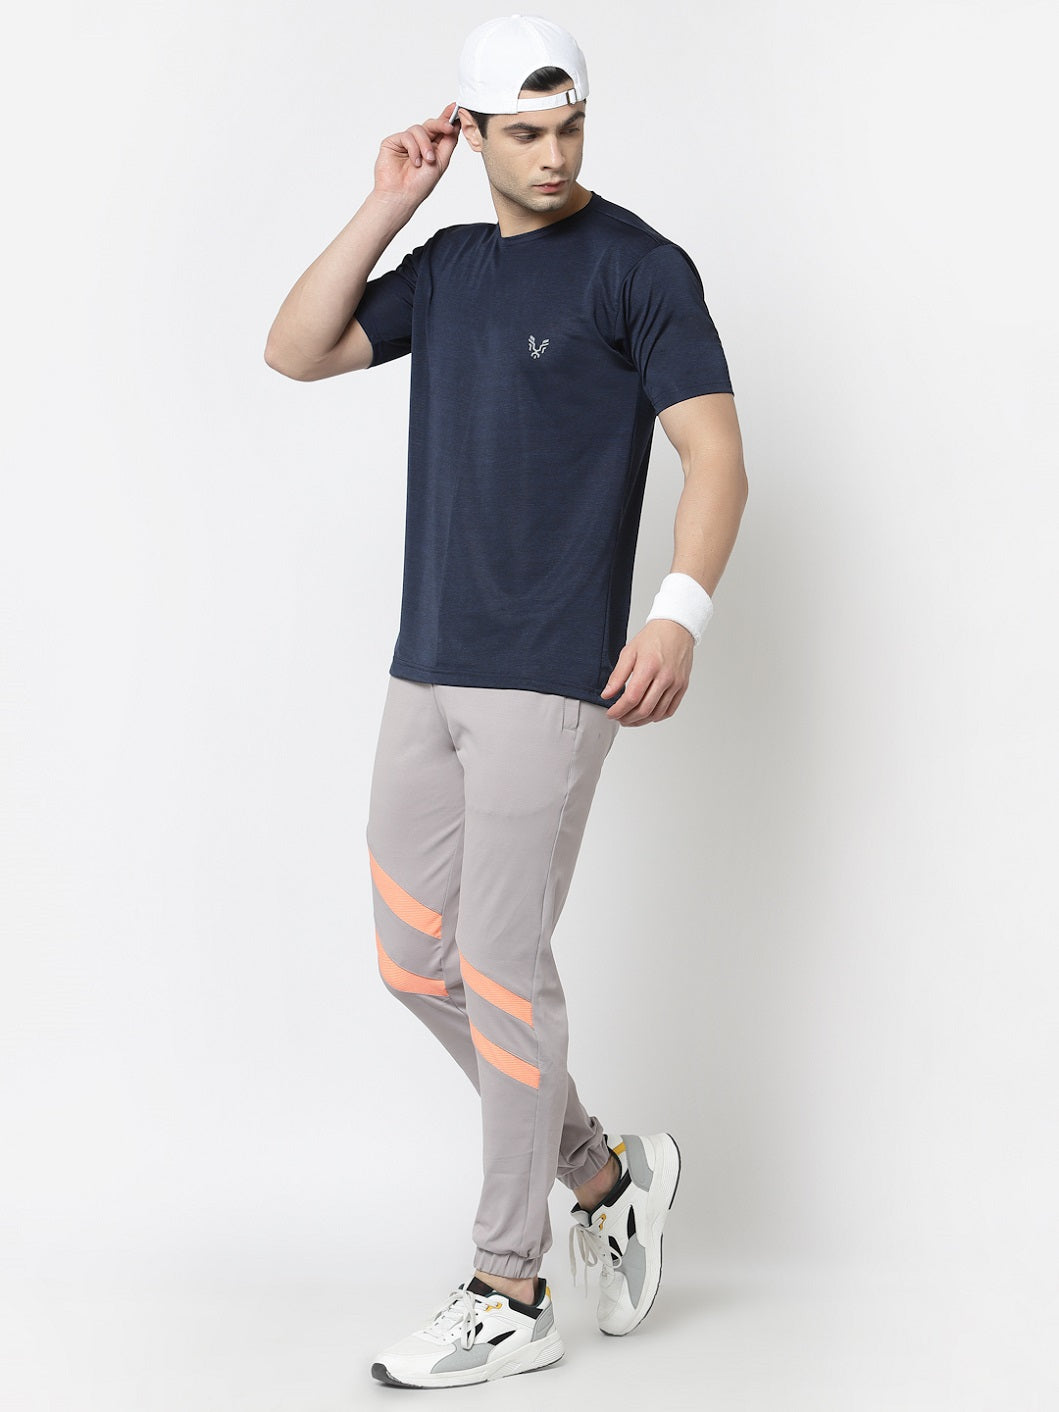 UZARUS Men's Dry Fit Sports Gym Regular T-Shirt